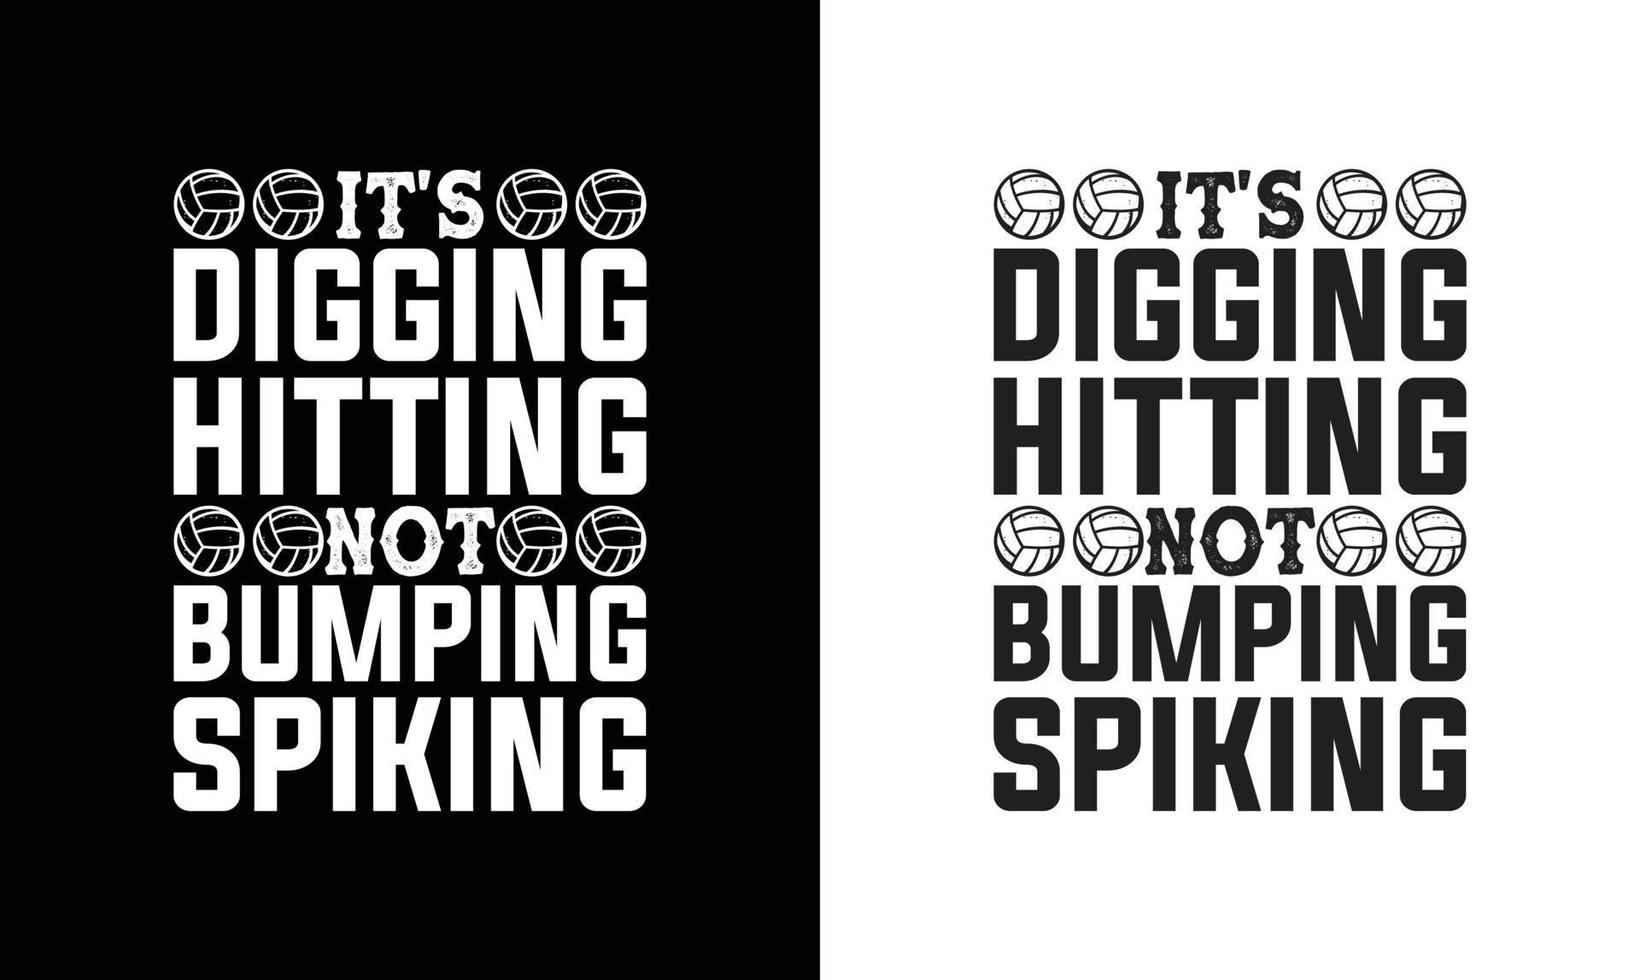 Volleyball-Zitat-T-Shirt-Design, Typografie vektor